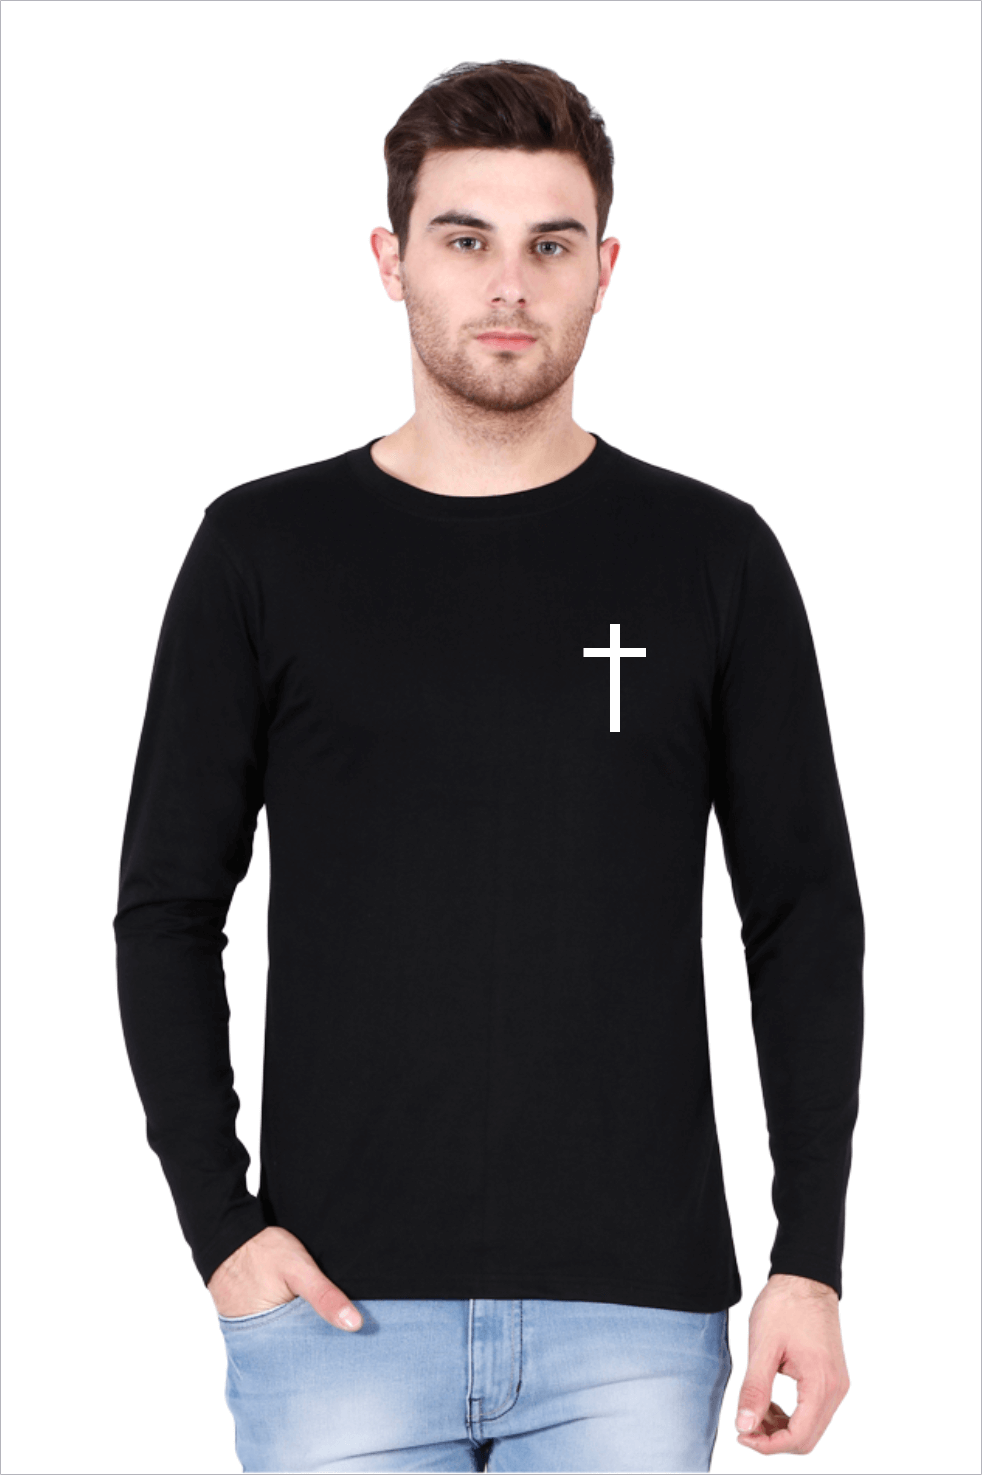 Living Words Men Round Neck T Shirt S / Black Buy Gospel T Shirts Online India - Cross